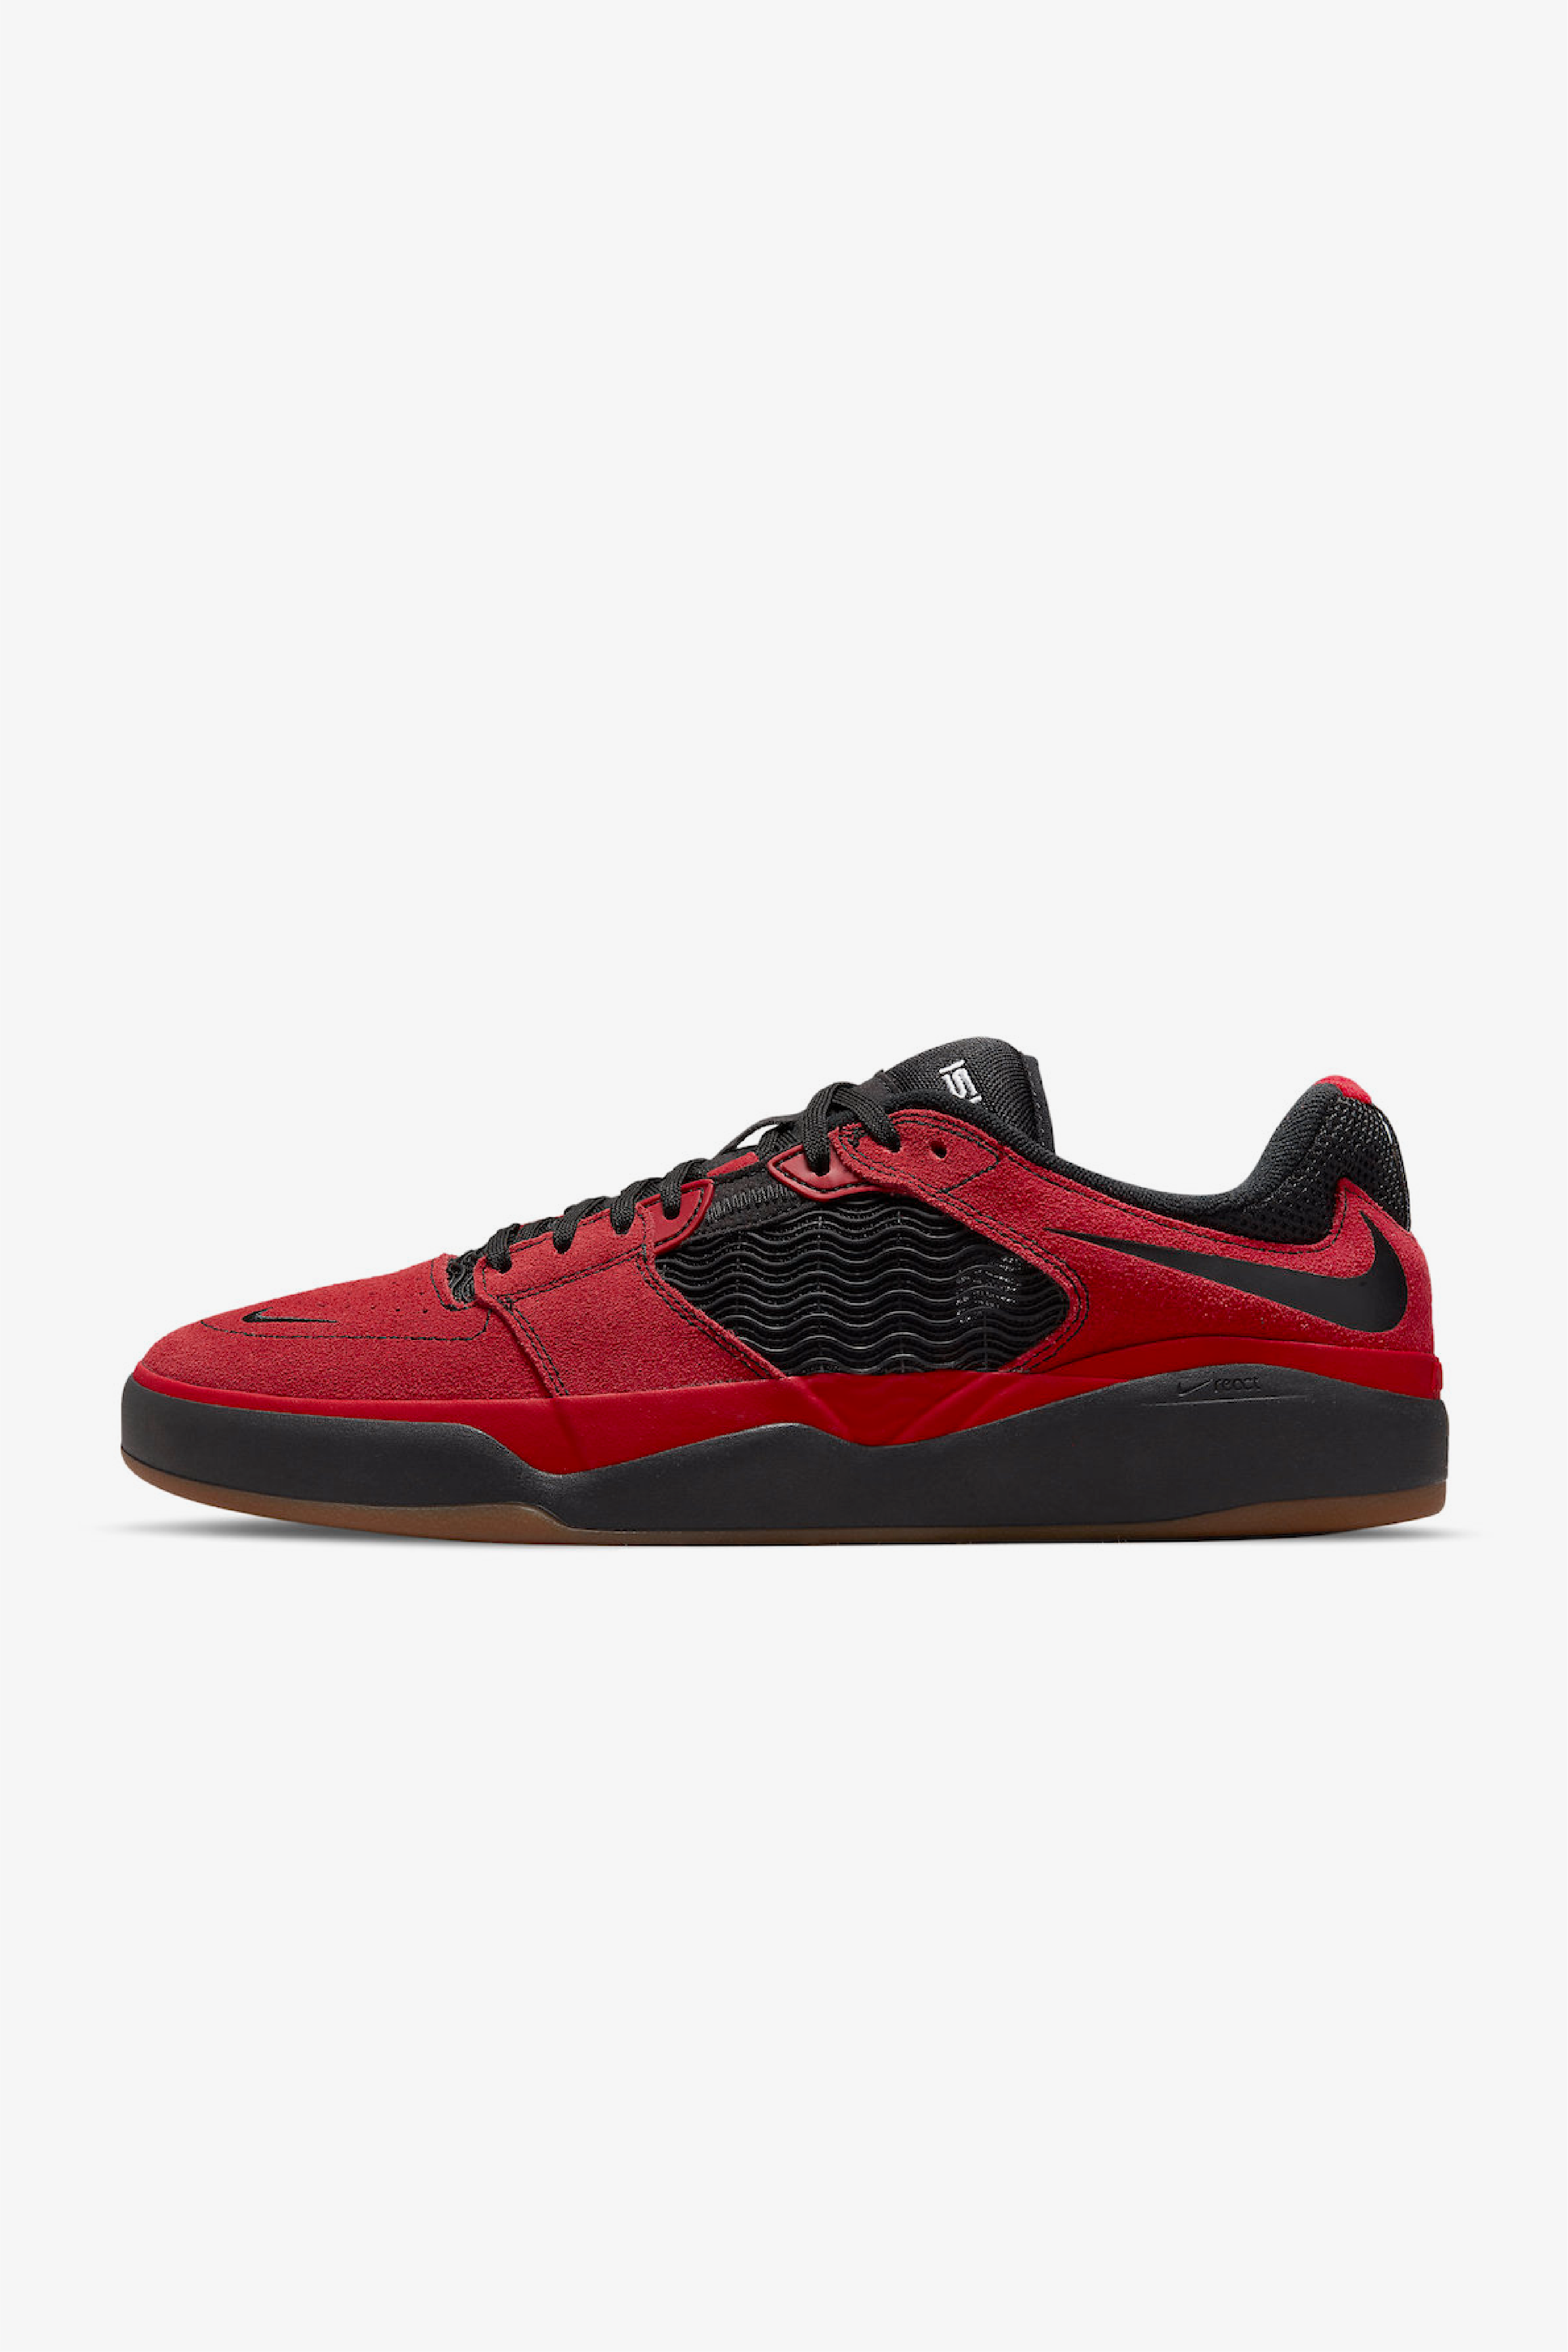 Selectshop FRAME - NIKE SB Nike SB Ishod  "Varsity Red" Footwear Dubai